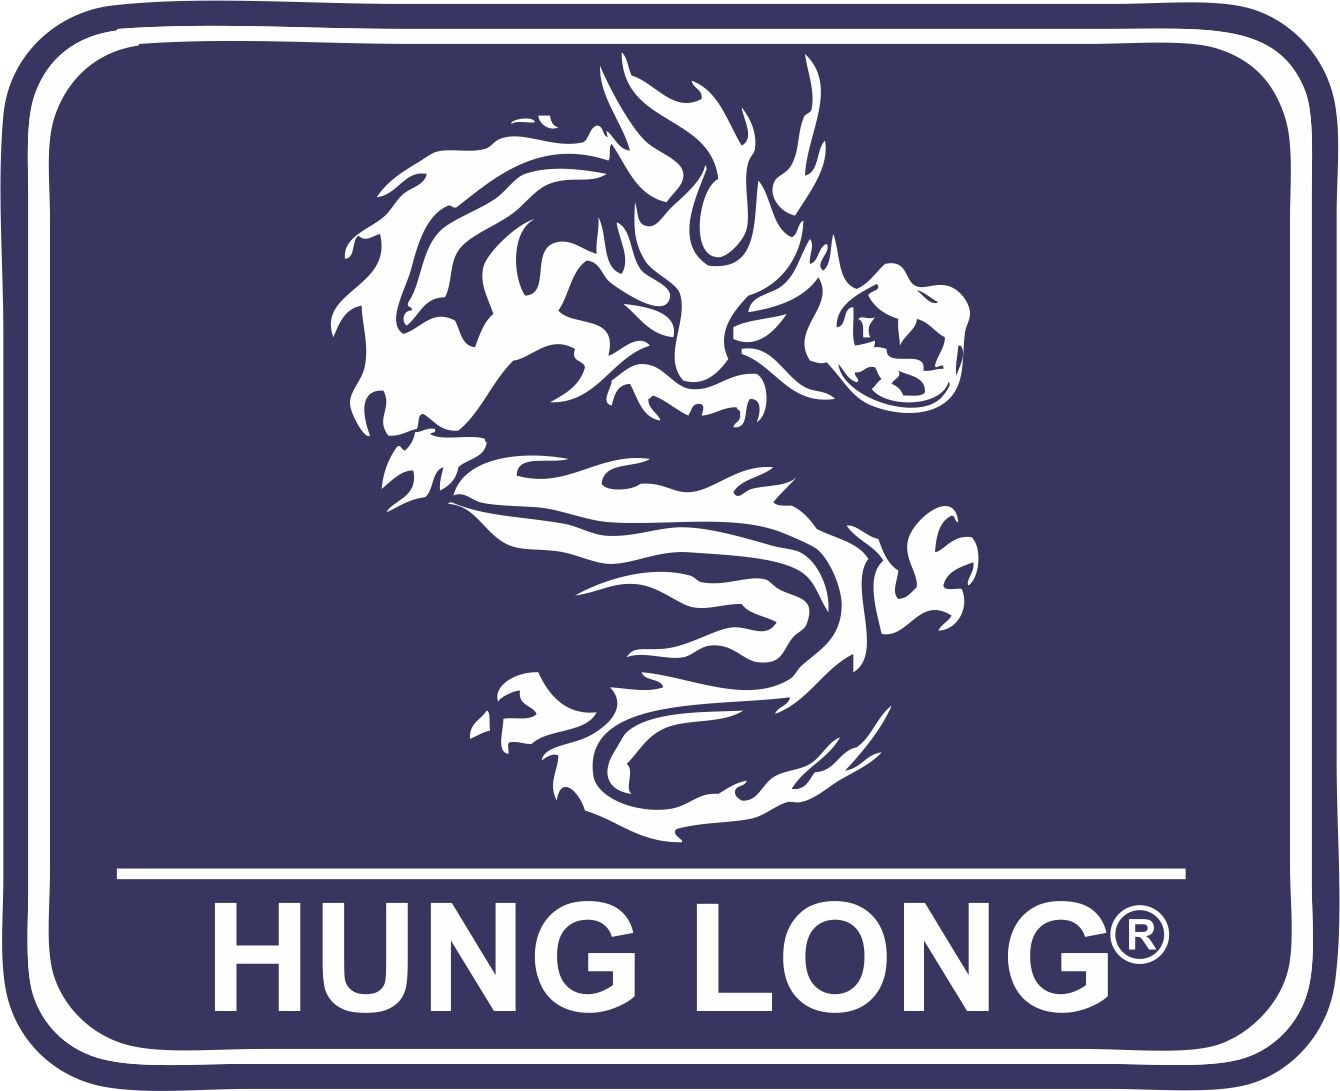 Hung Long Thread JSC